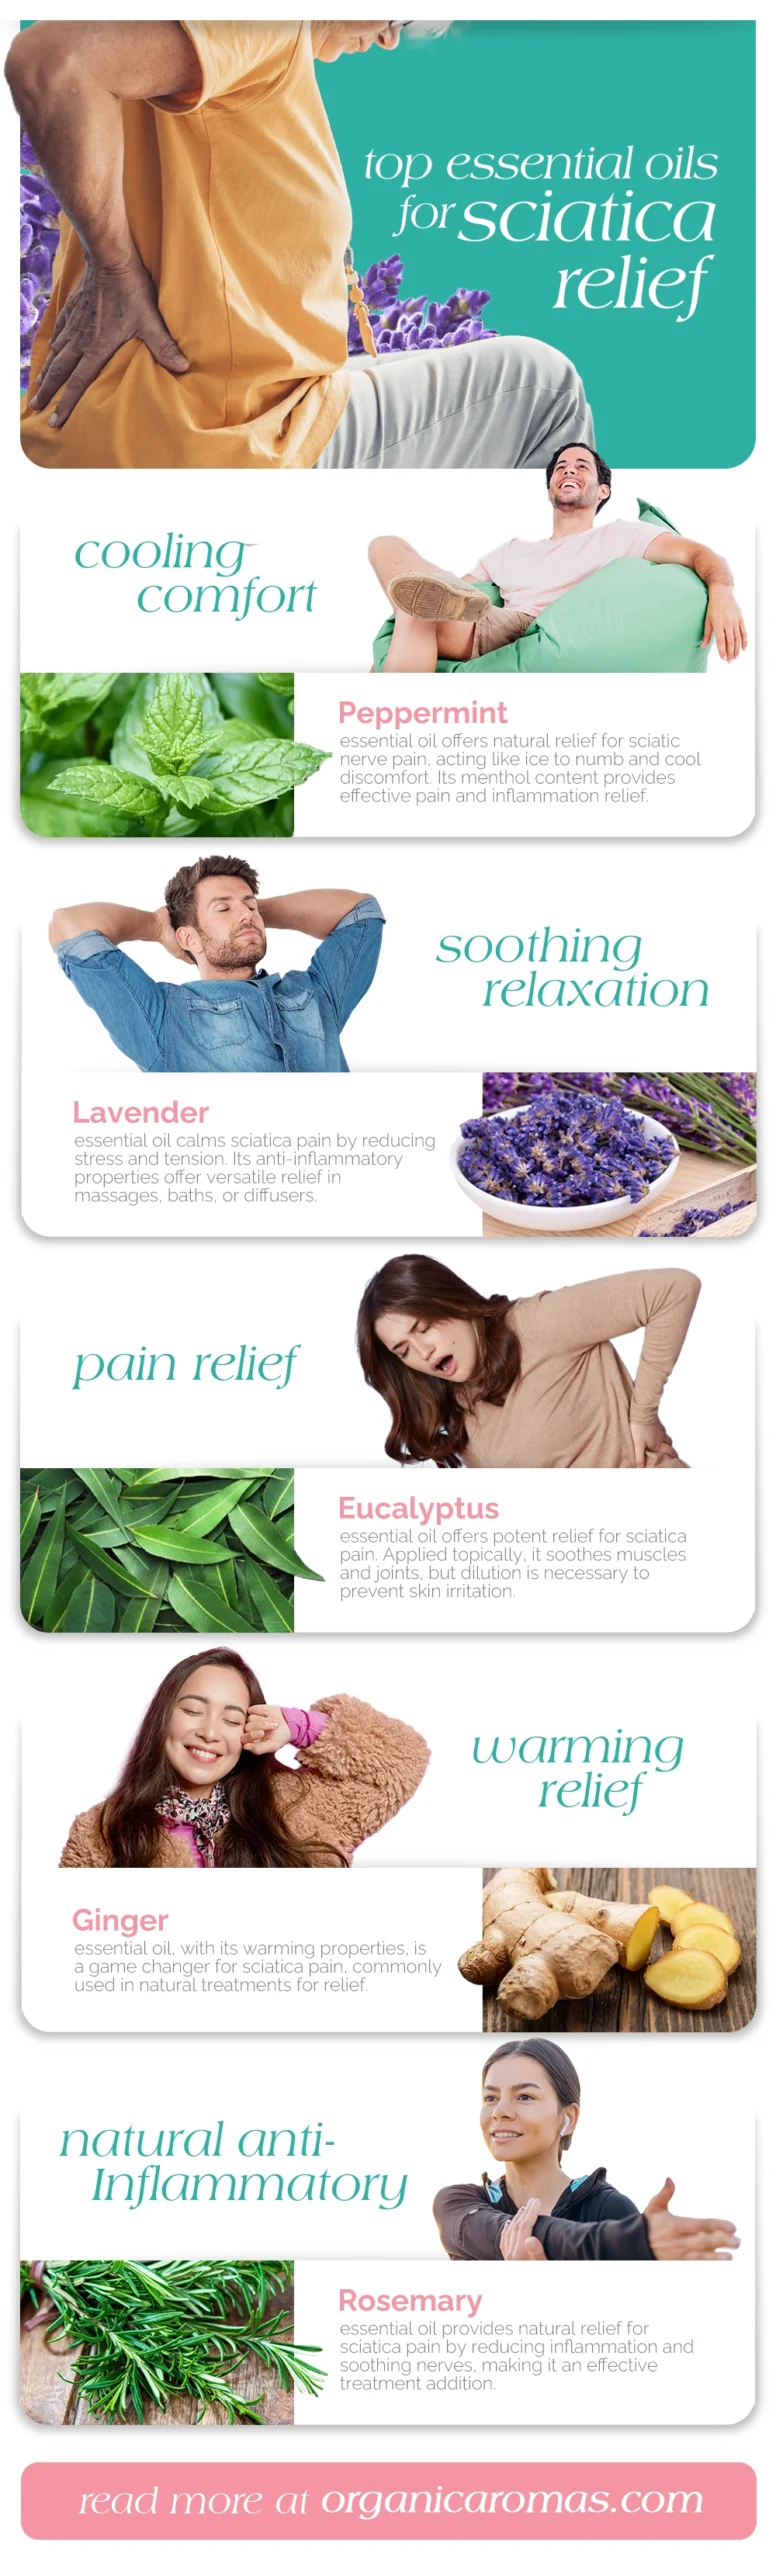 top essential oils for sciatica relief Infographic by Organic Aromas